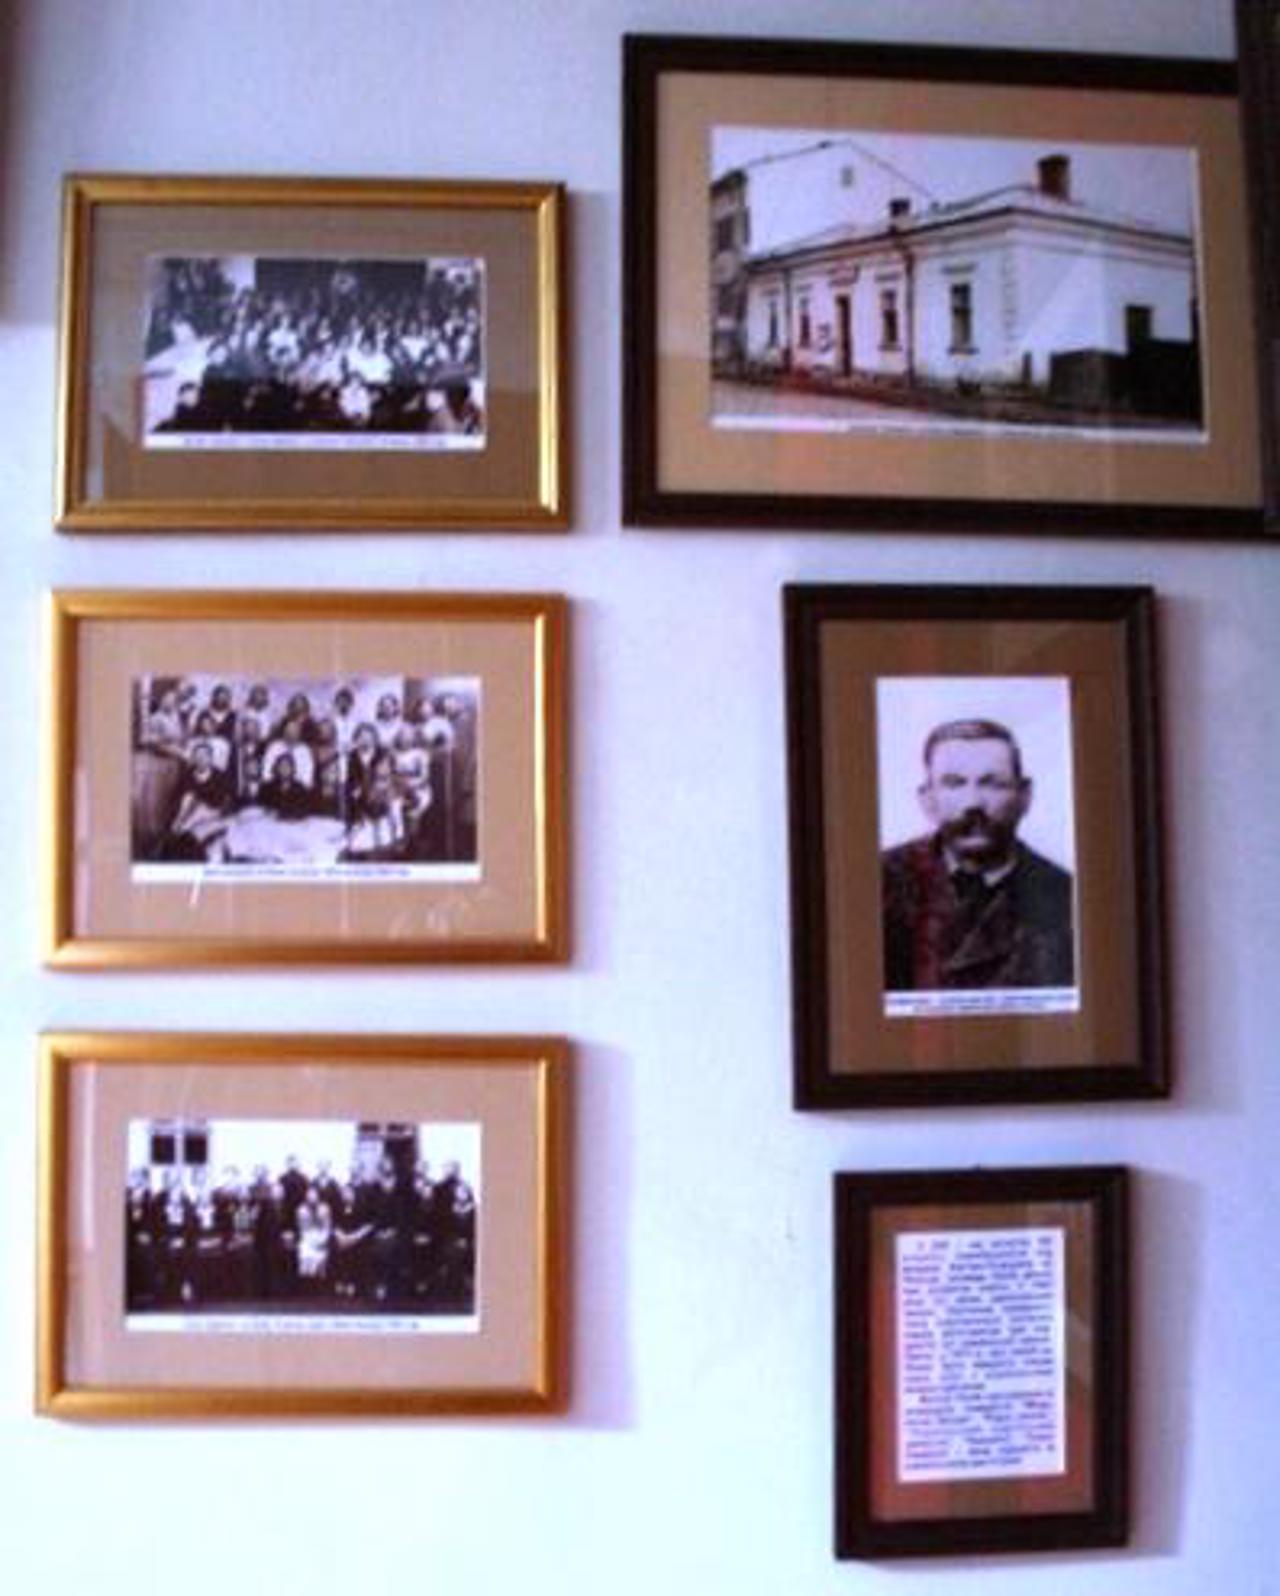 Bandera Family Museum, Stryi